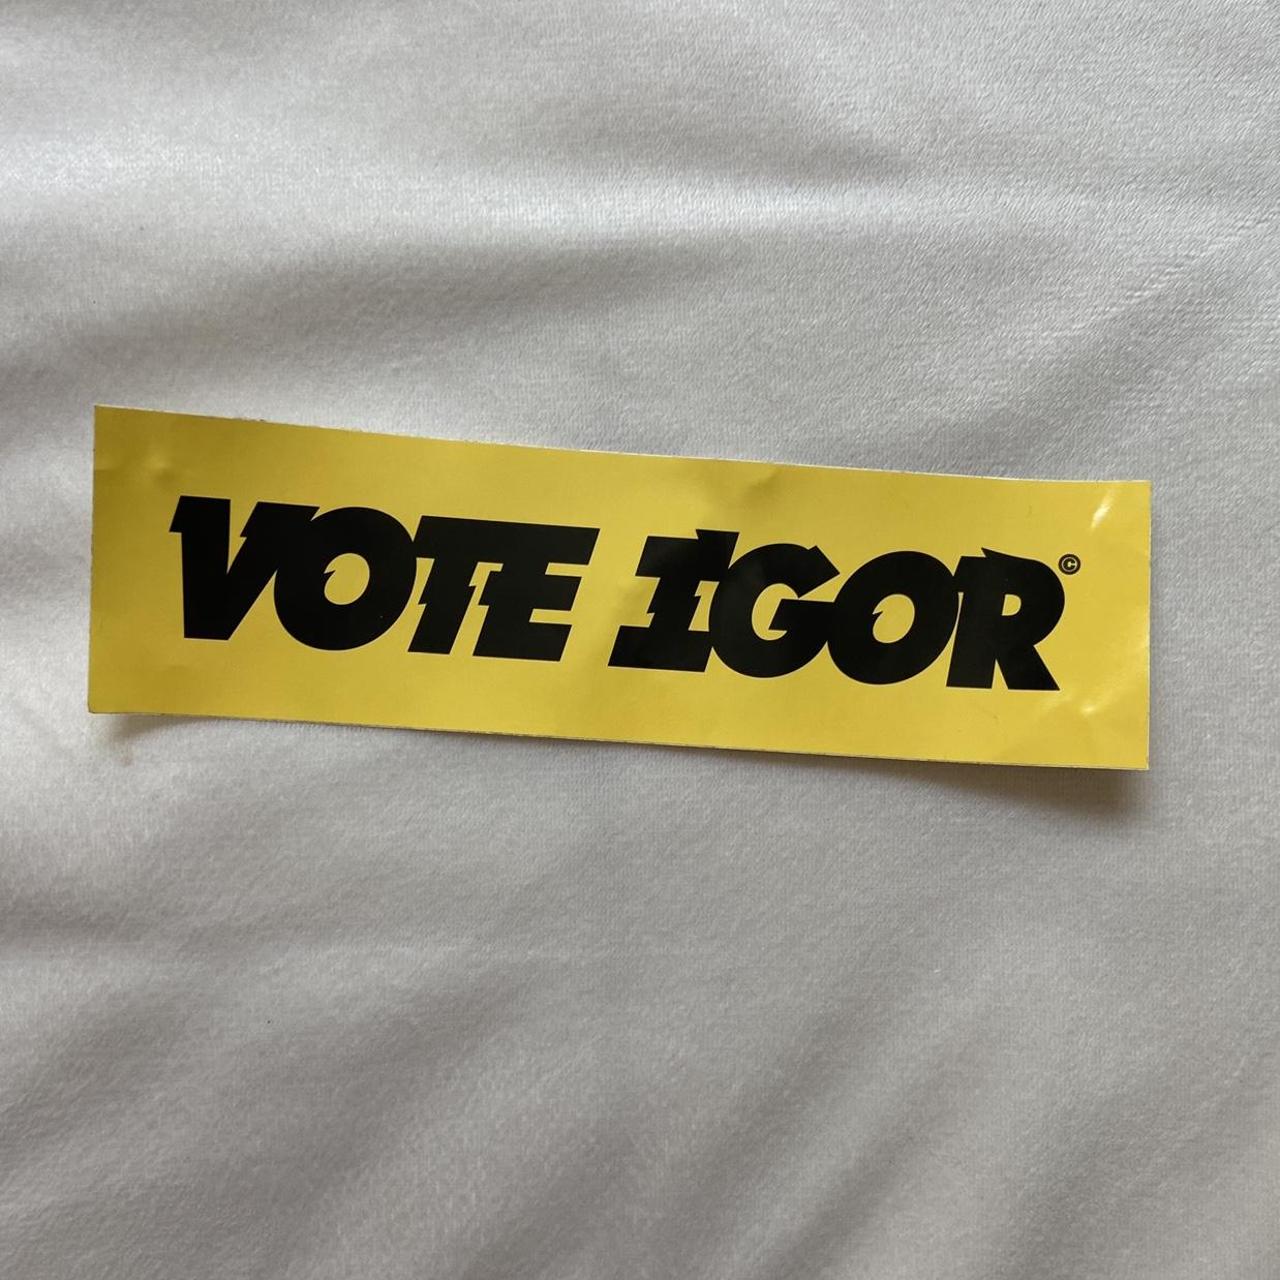 Vote Igor Poster 